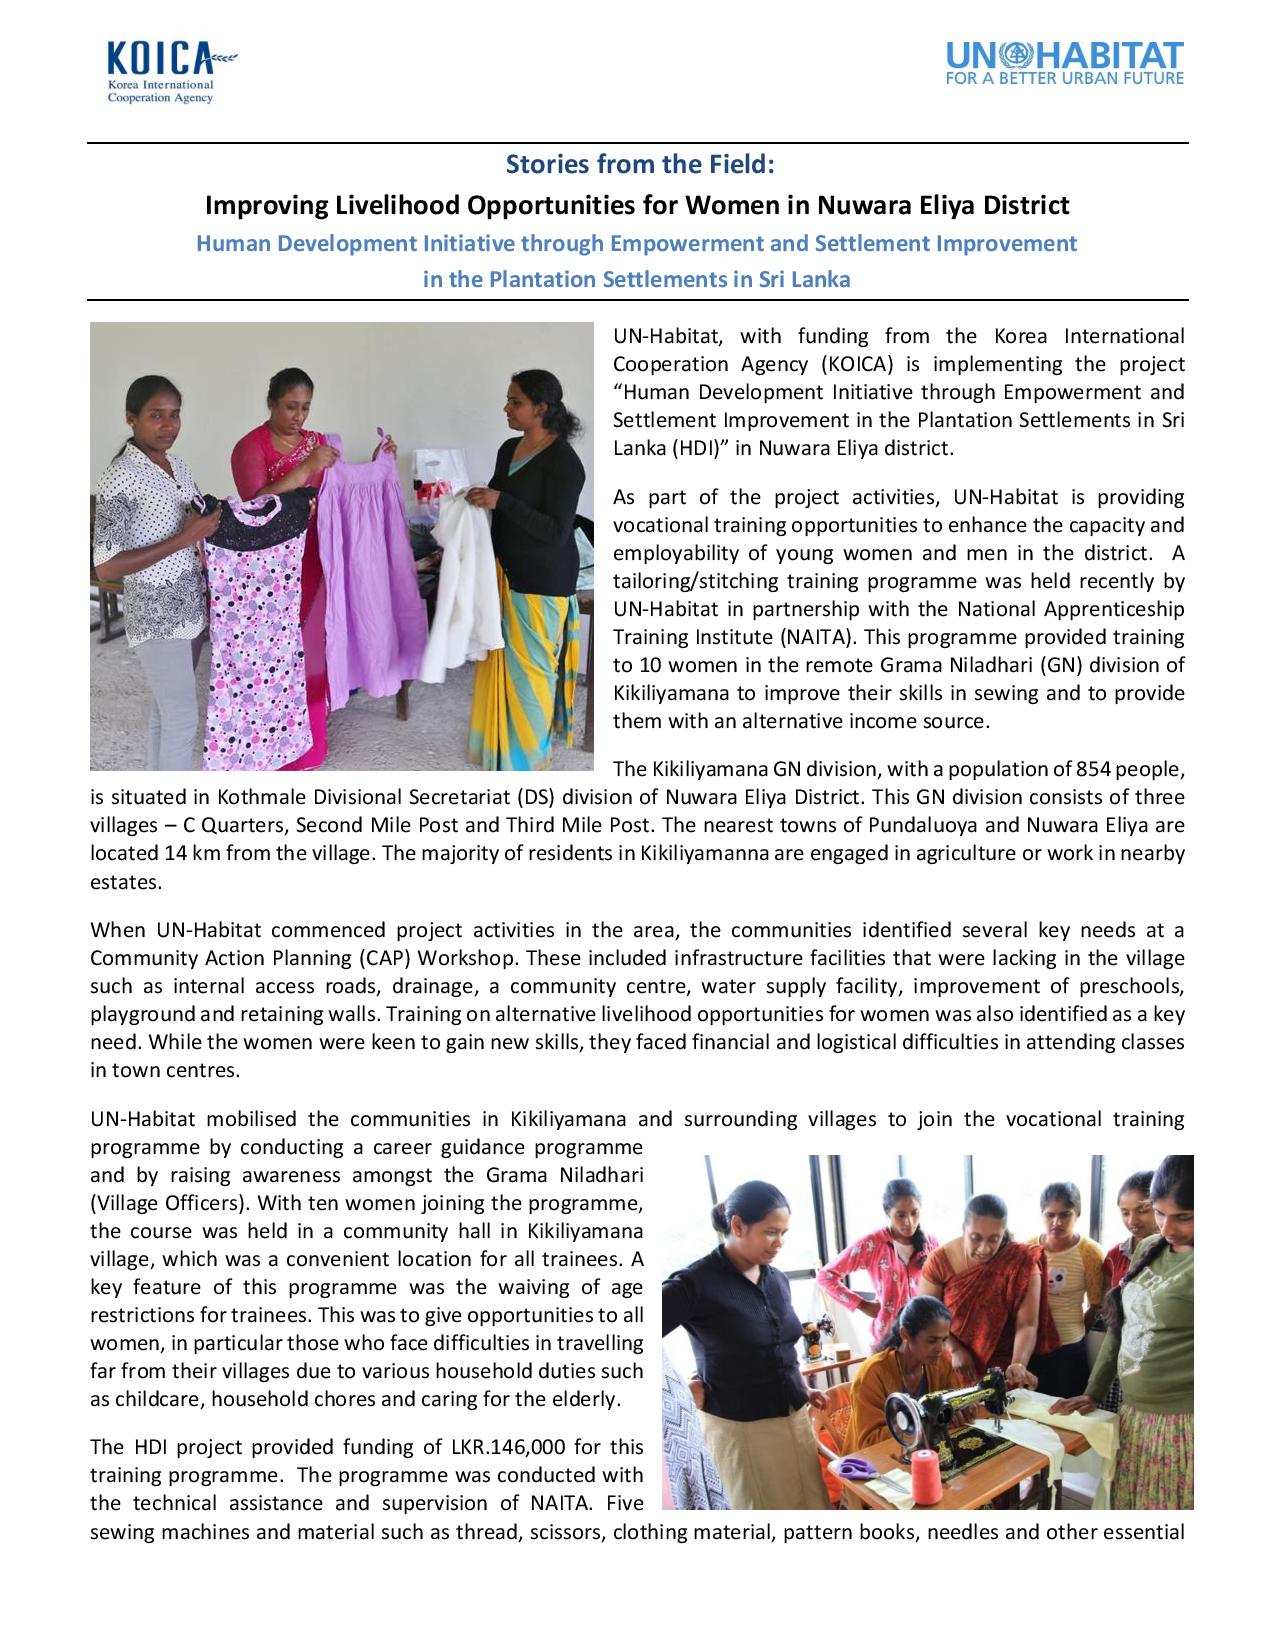 Sri Lanka HDI Case Study: Improving Livelihood Opportunities for Women in Nuwara Eliya District